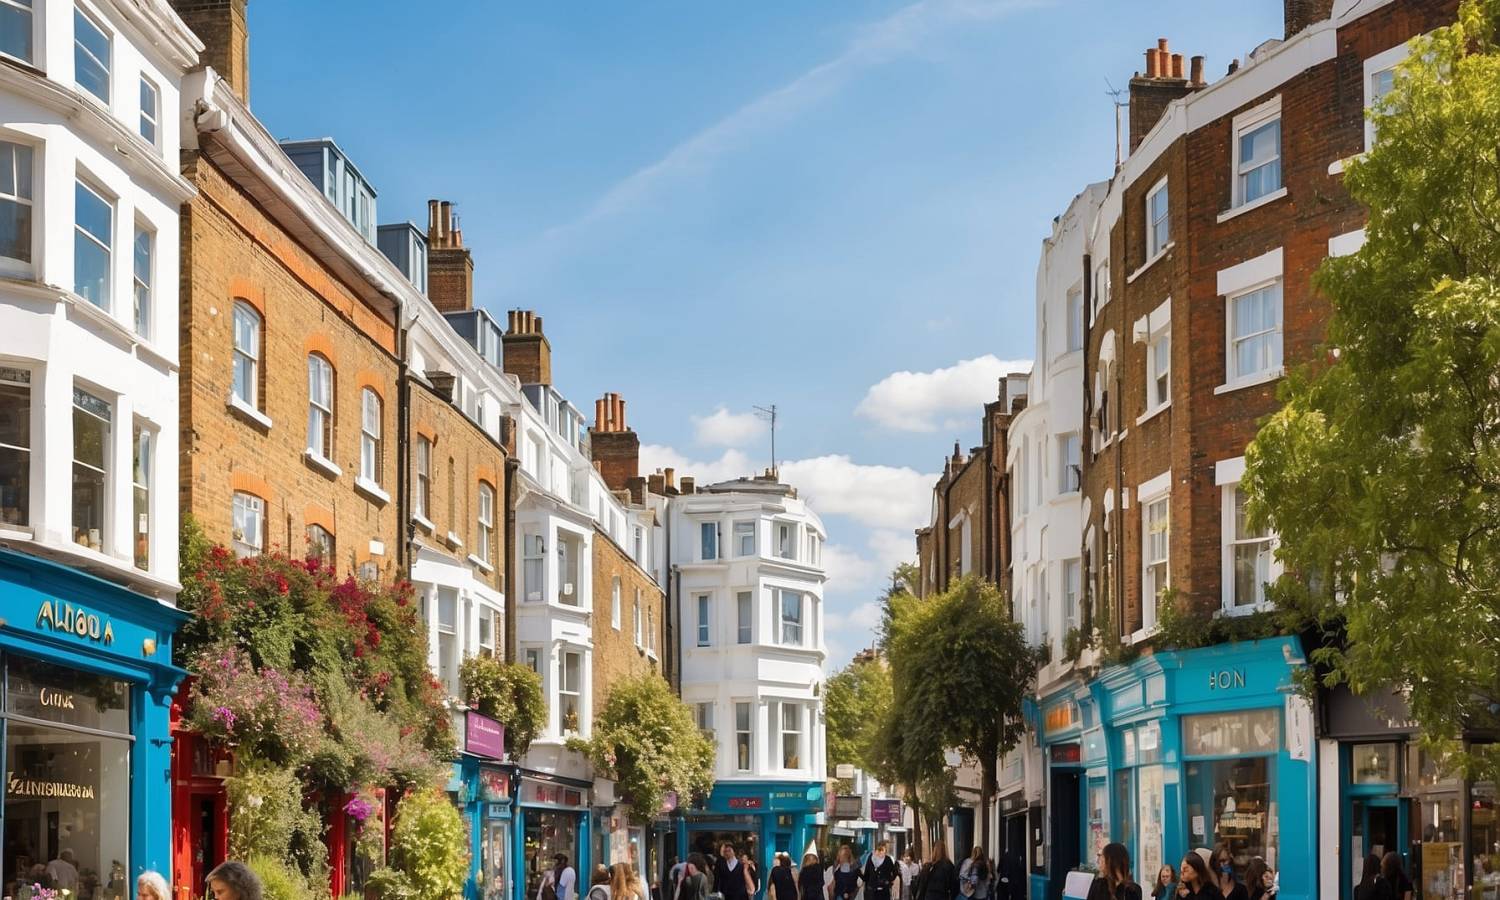 Continue to Describe London's Most Prestigious Neighbourhoods